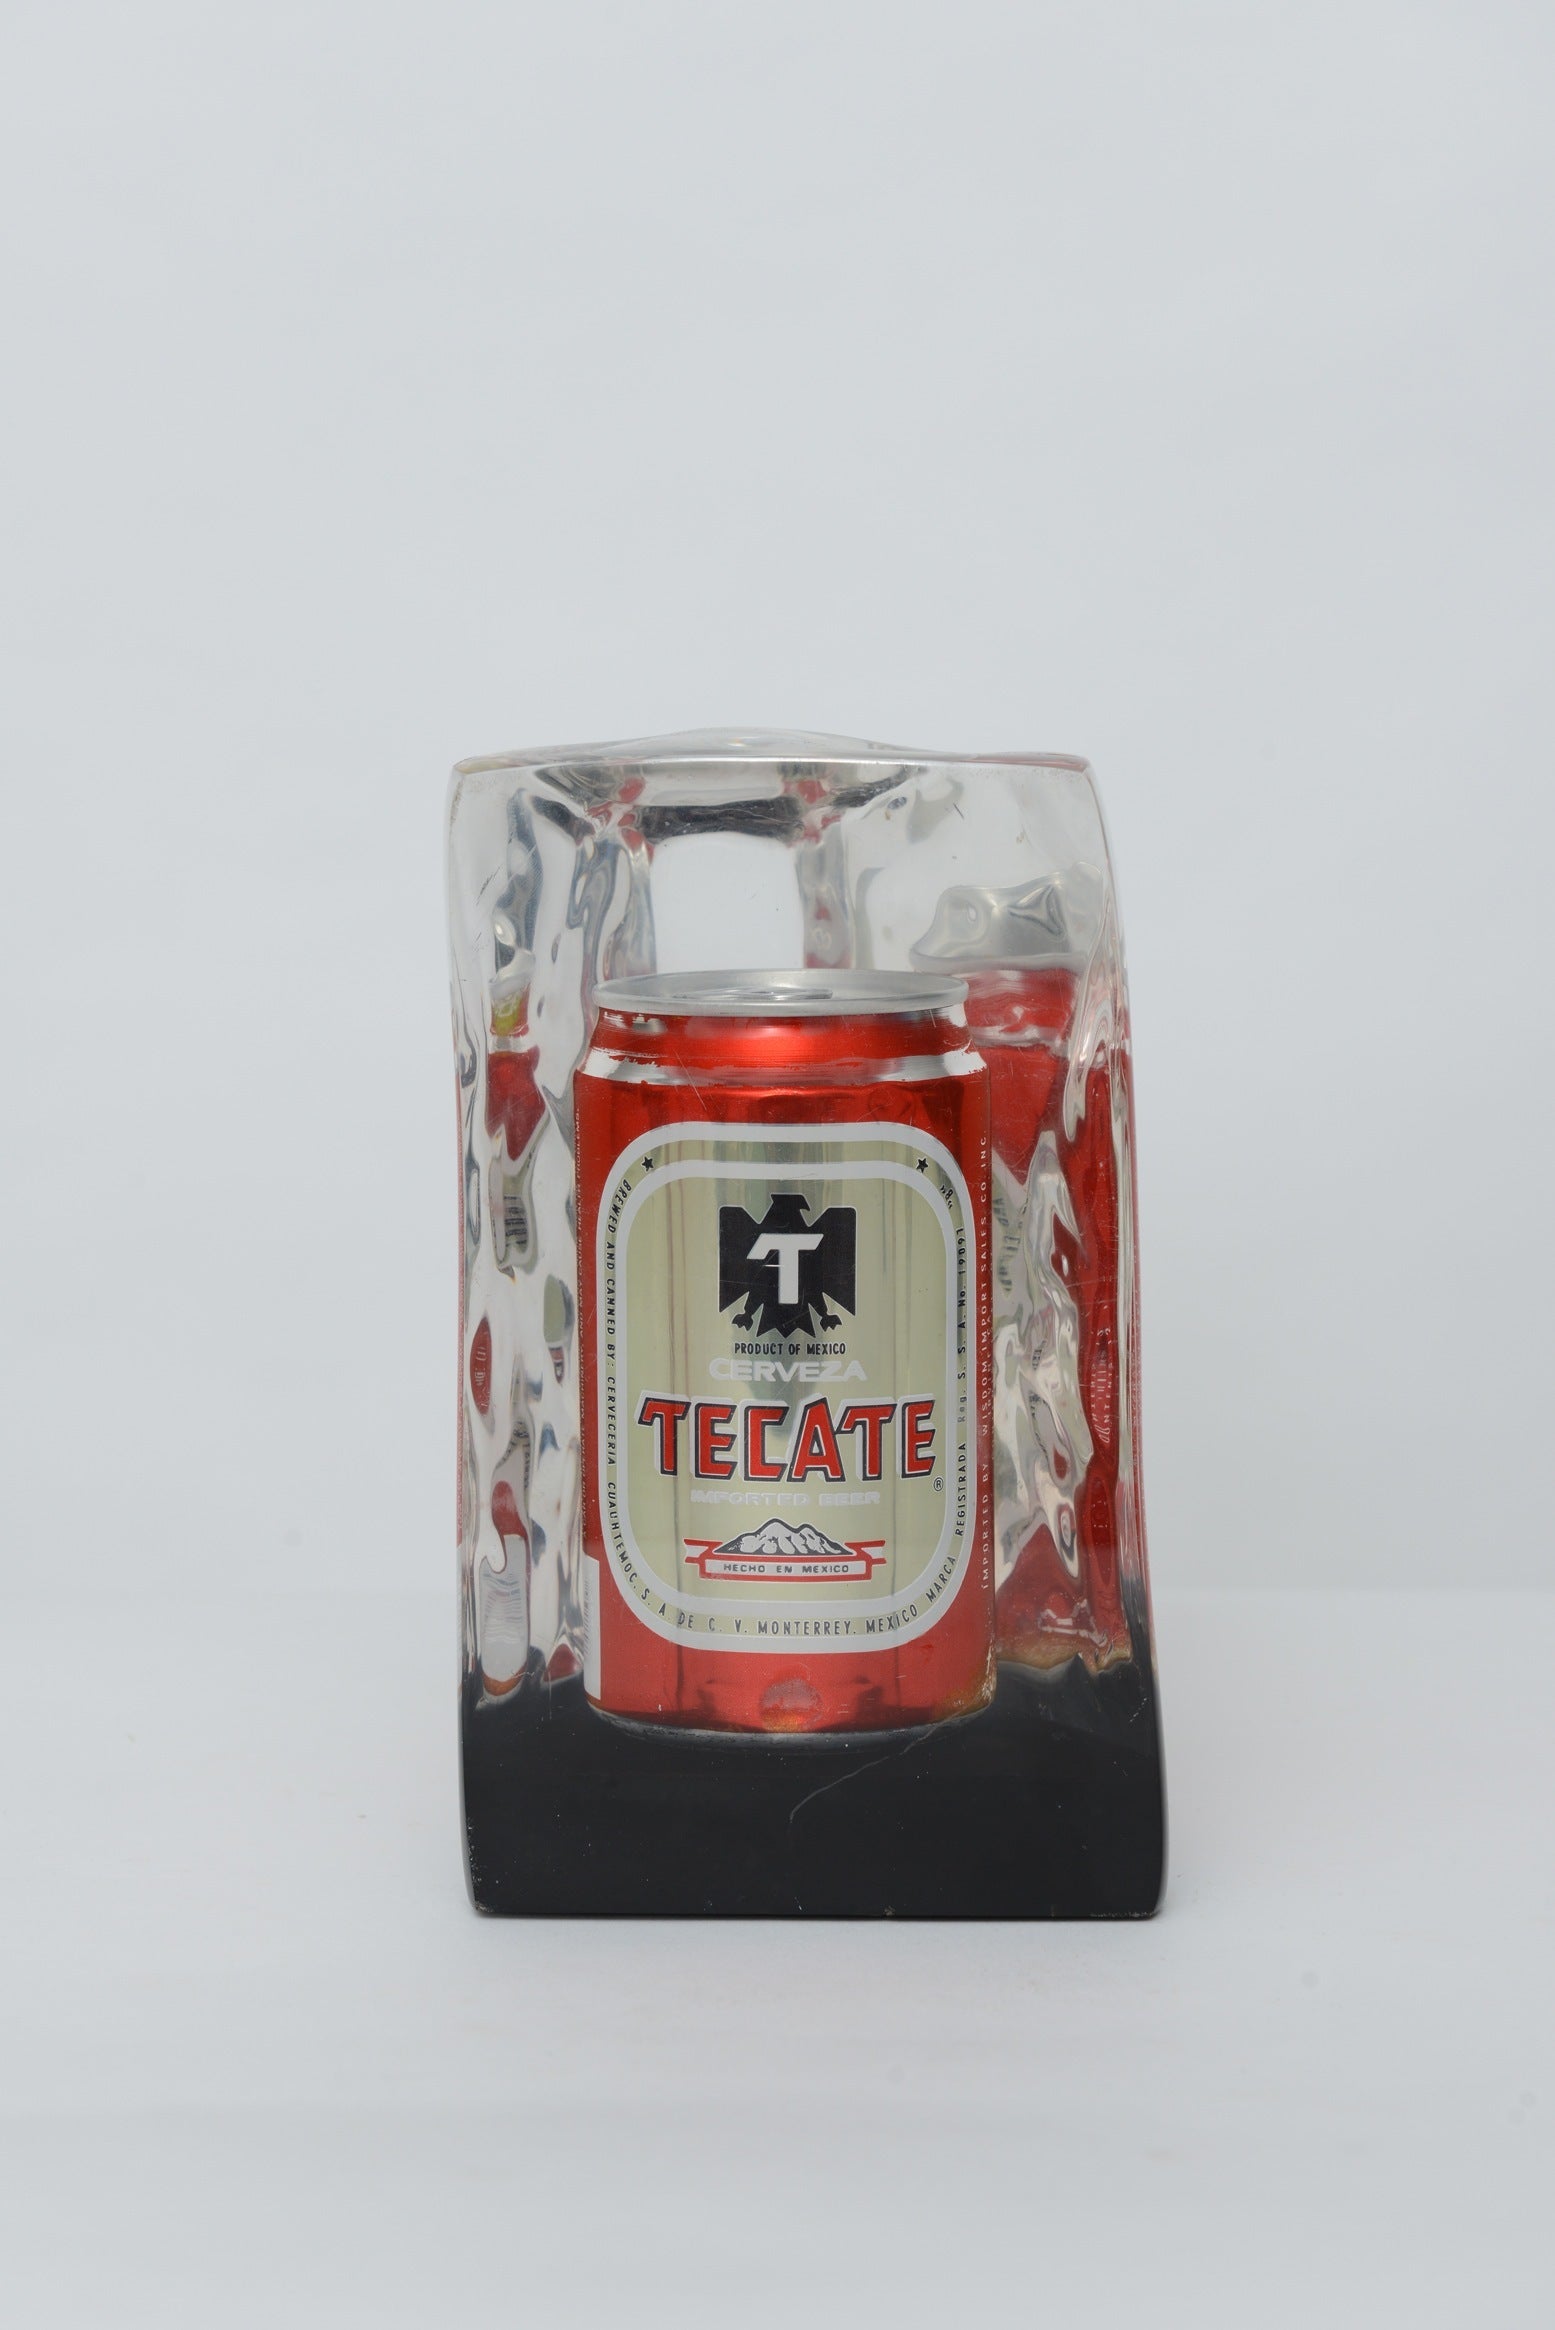 Tabletop Sculpture of Molten Lucite Encasing "Tecate" Beer Can